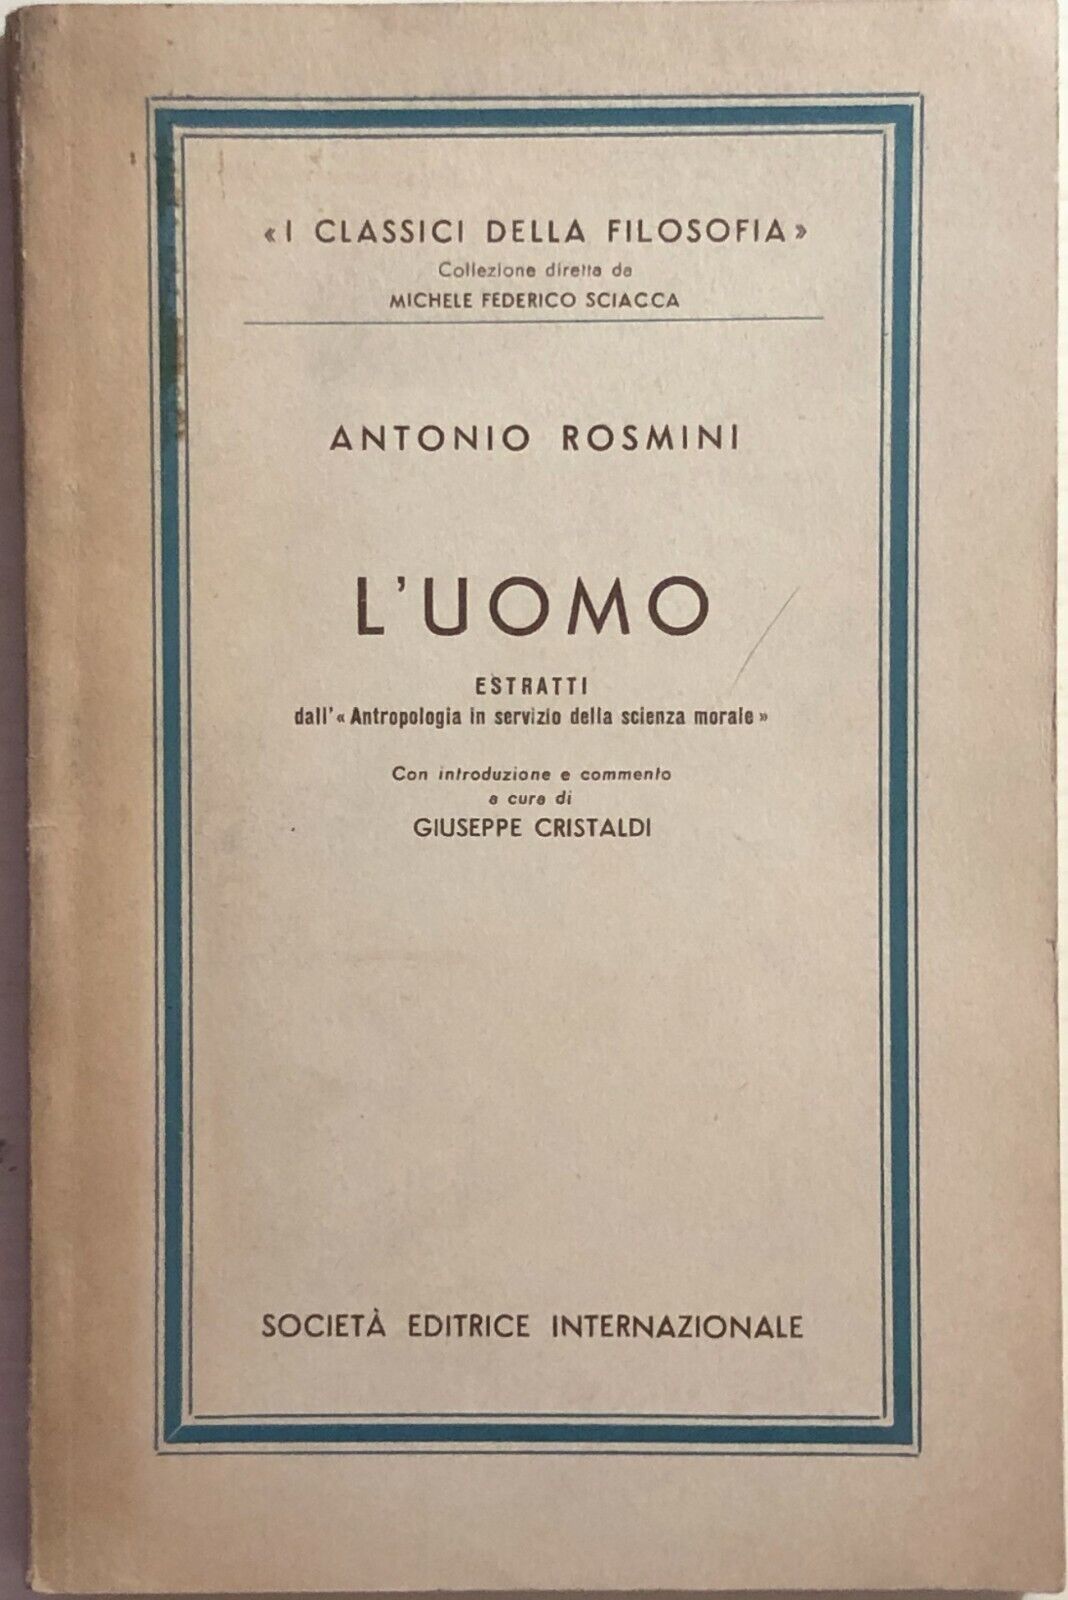 L'uomo di Antonio Rosmini, 1967, Societ? editrice internazionale